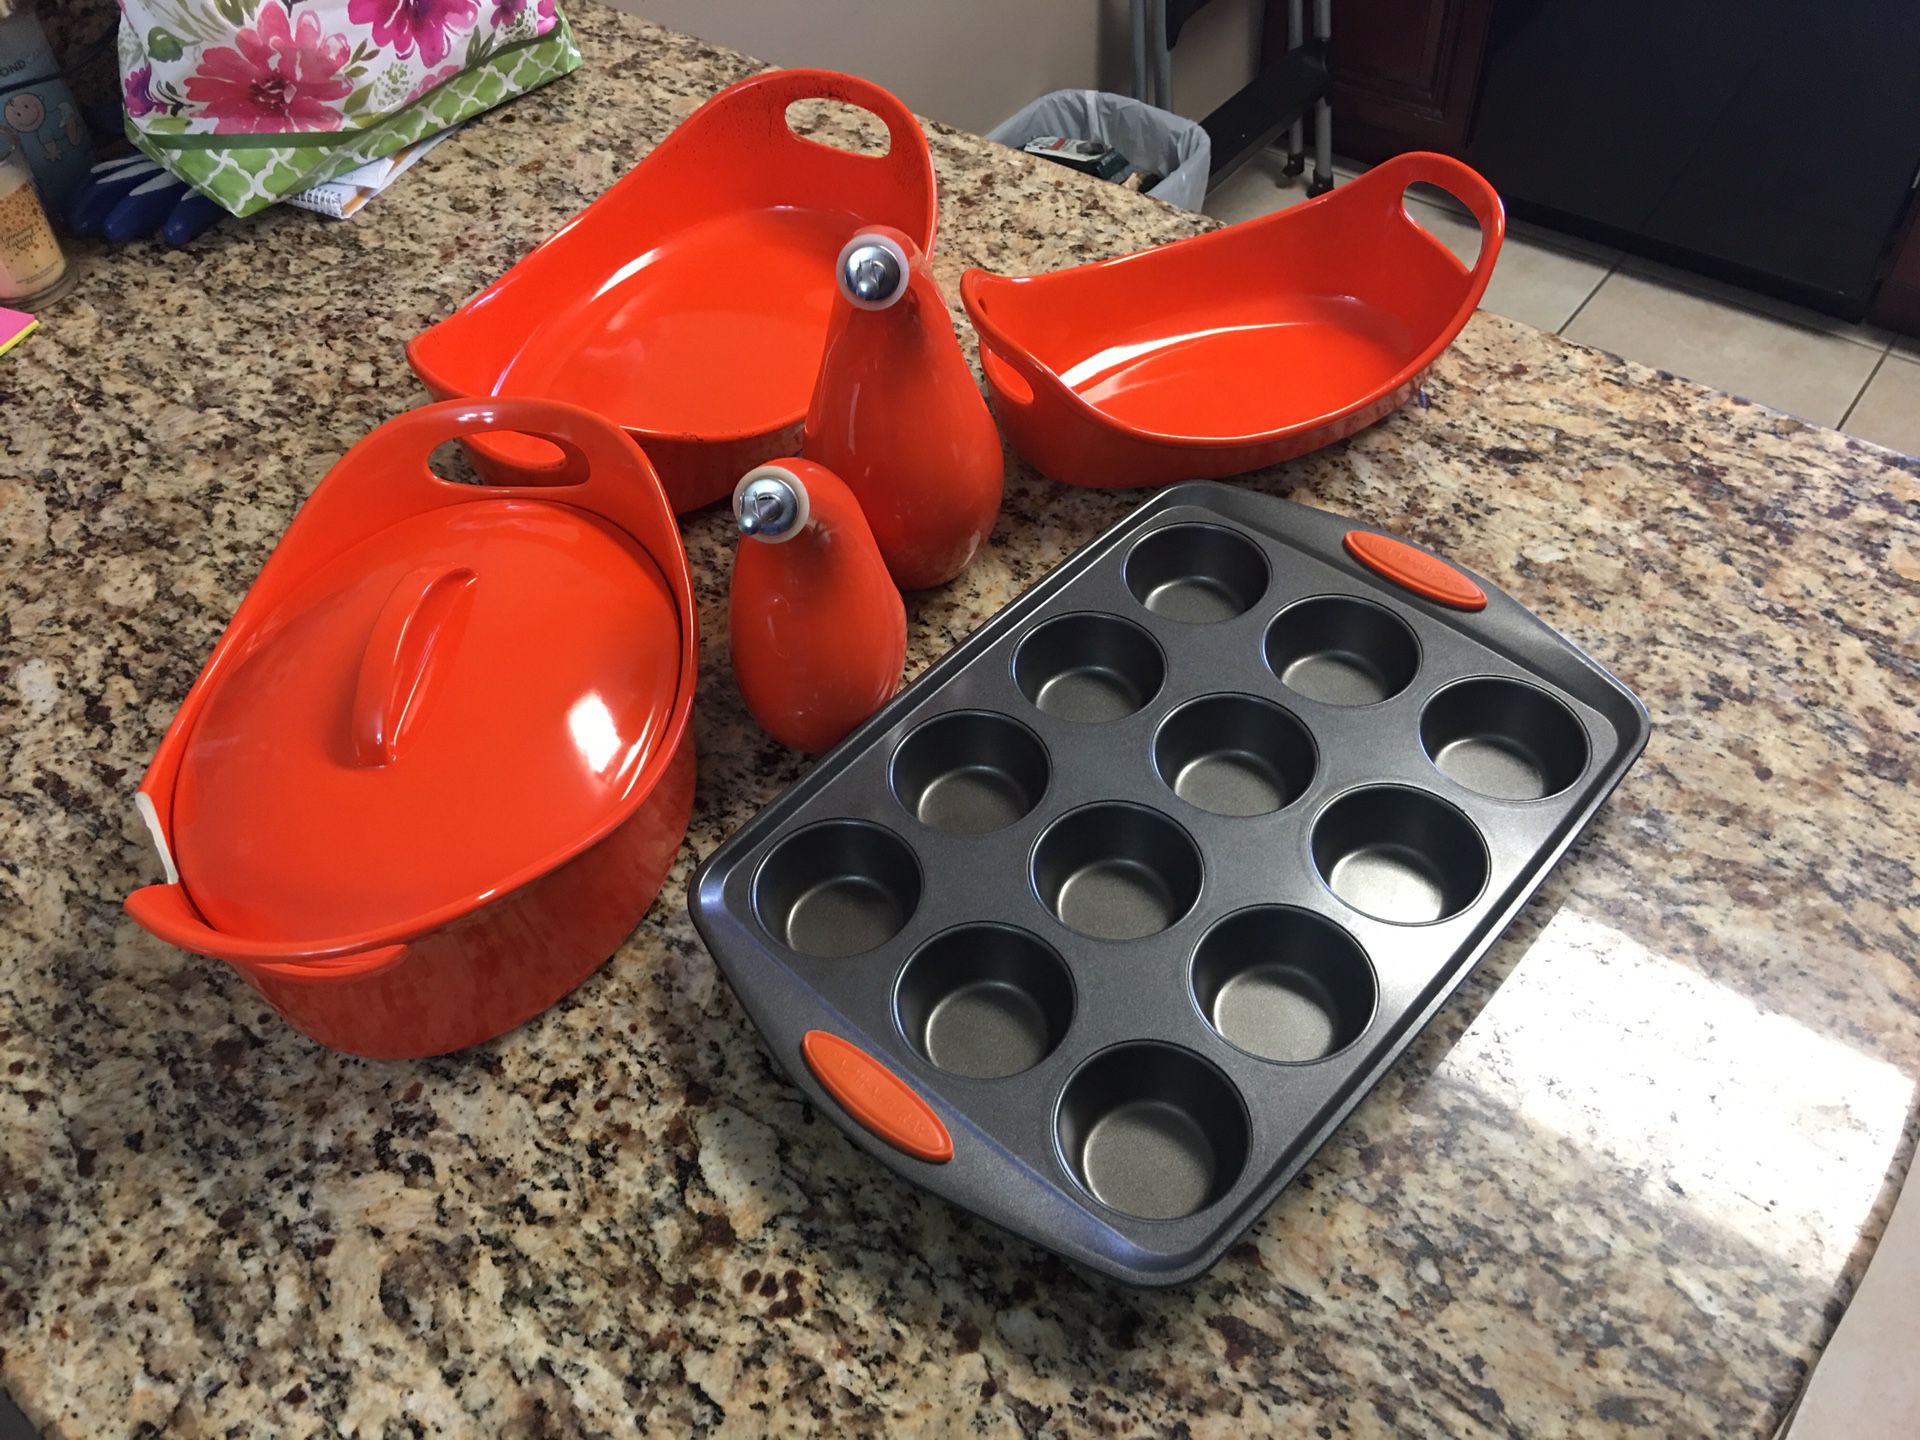 Rachel Ray Bakeware | Casserole dishes, Non-Stick Muffin Sheet Pan, & EVOO and Vinegar Bottle Set